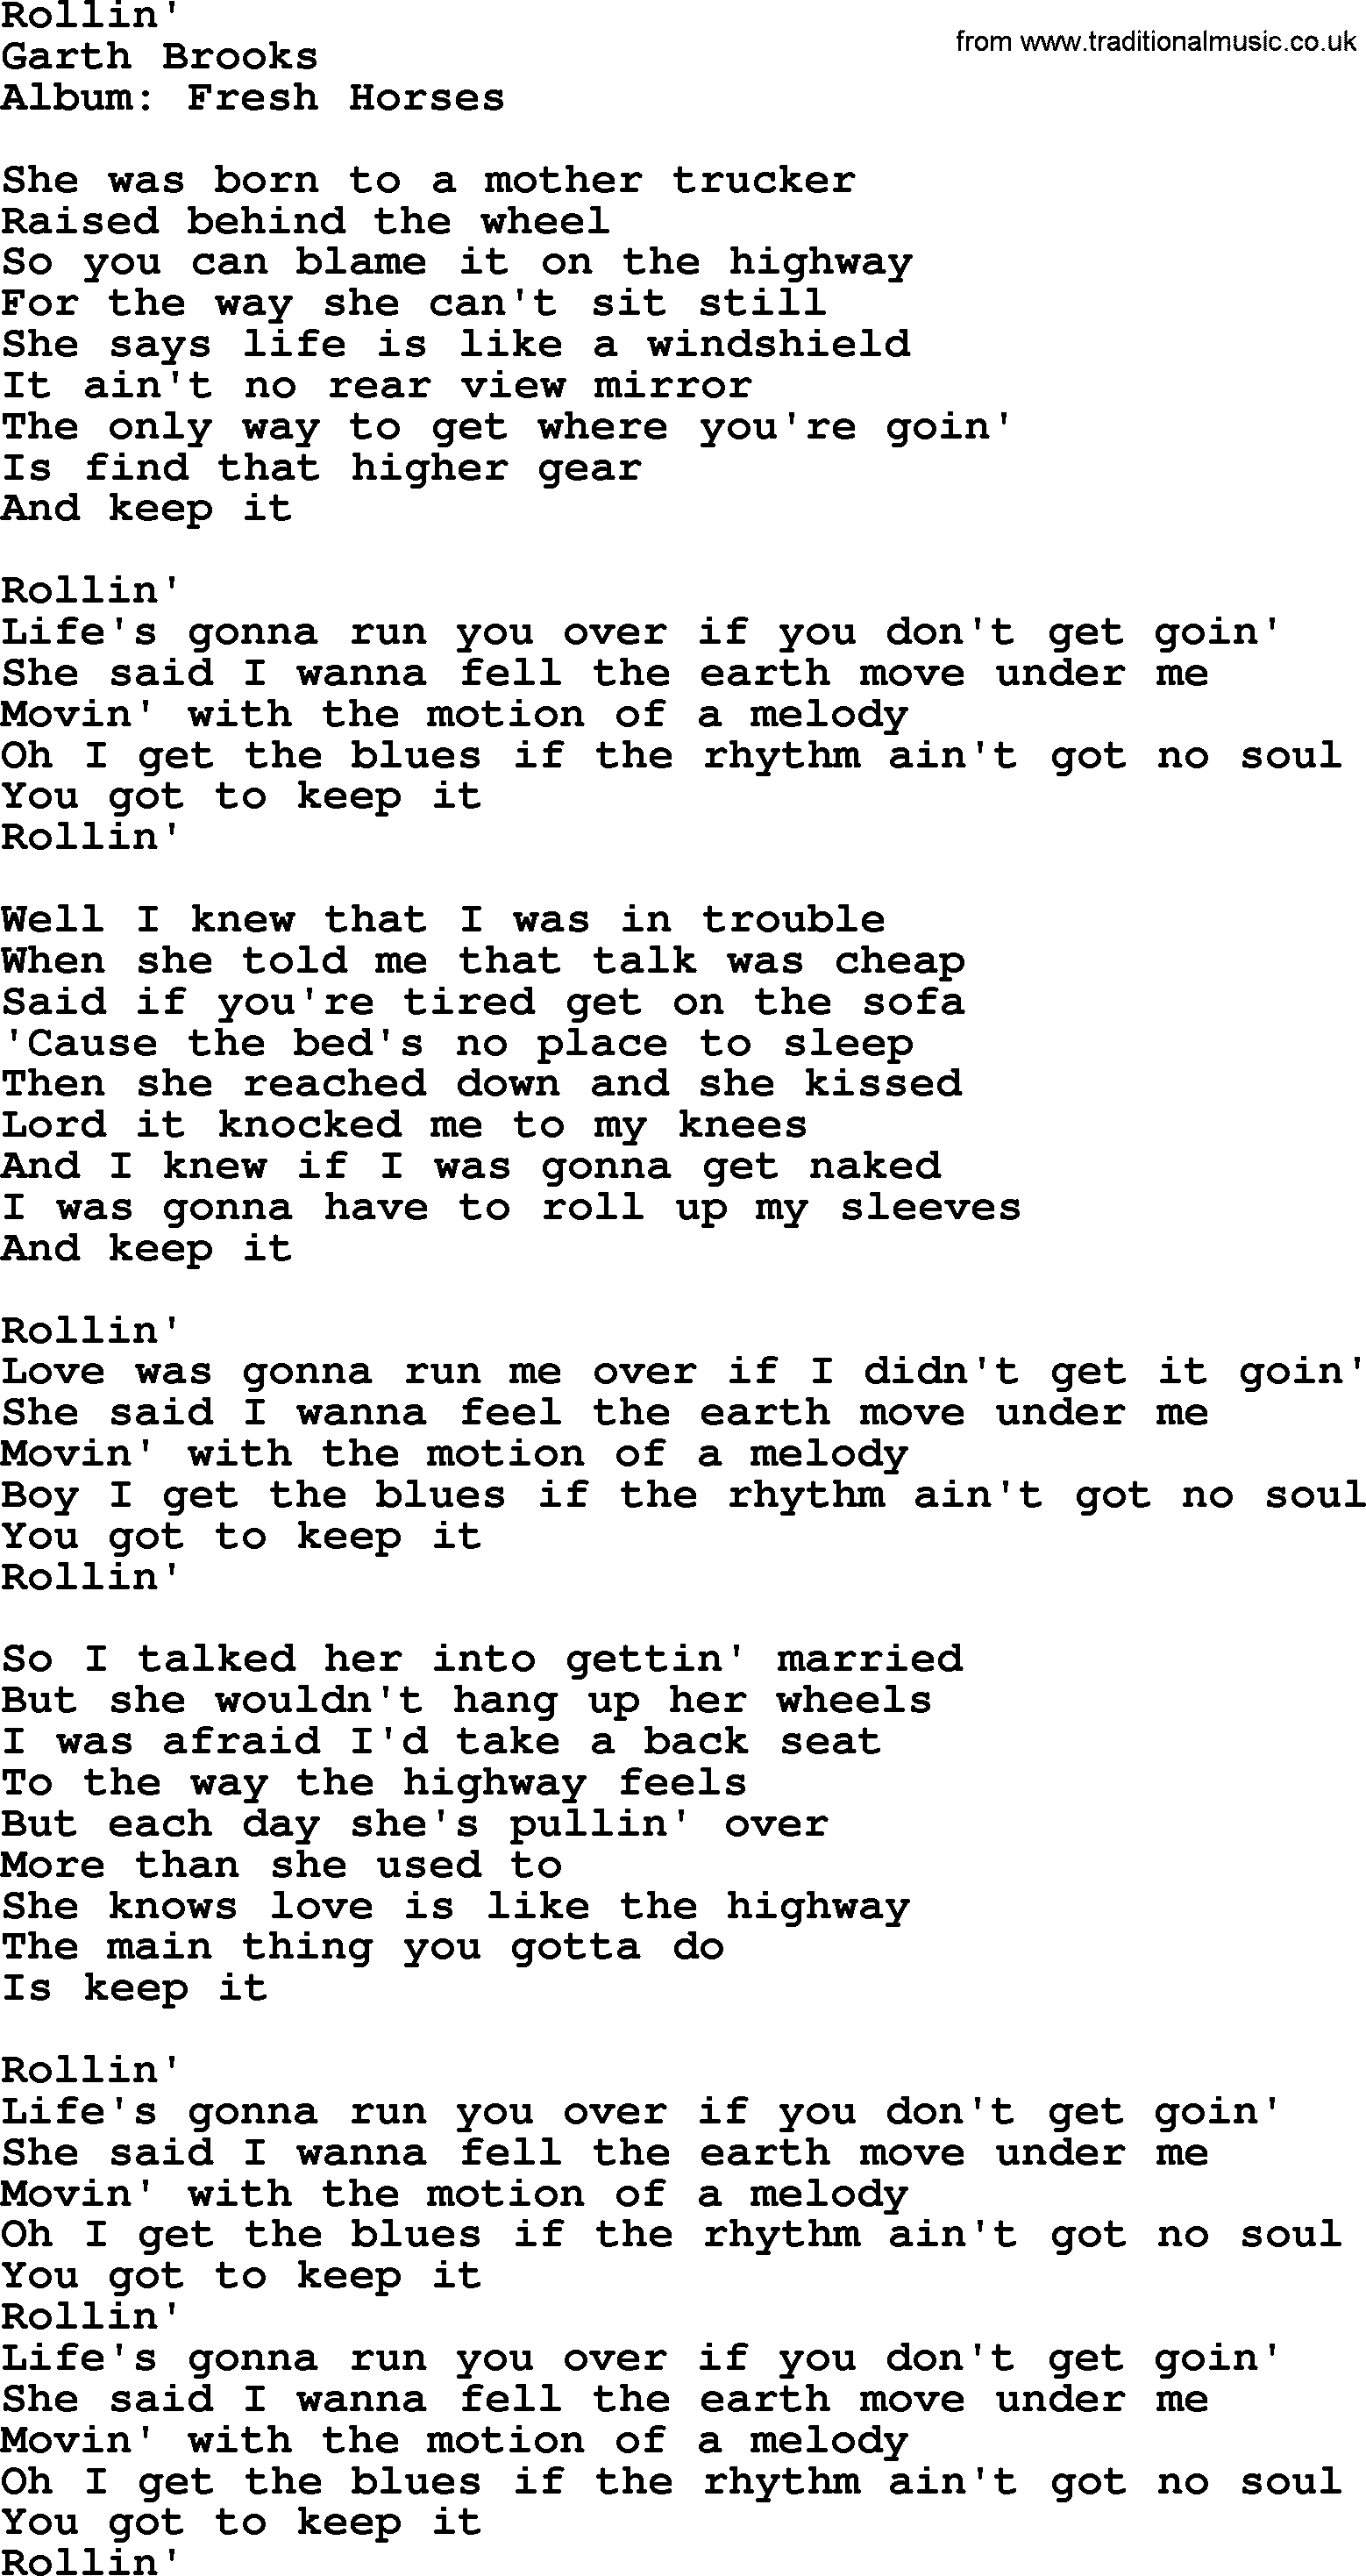 Garth Brooks song: Rollin', lyrics